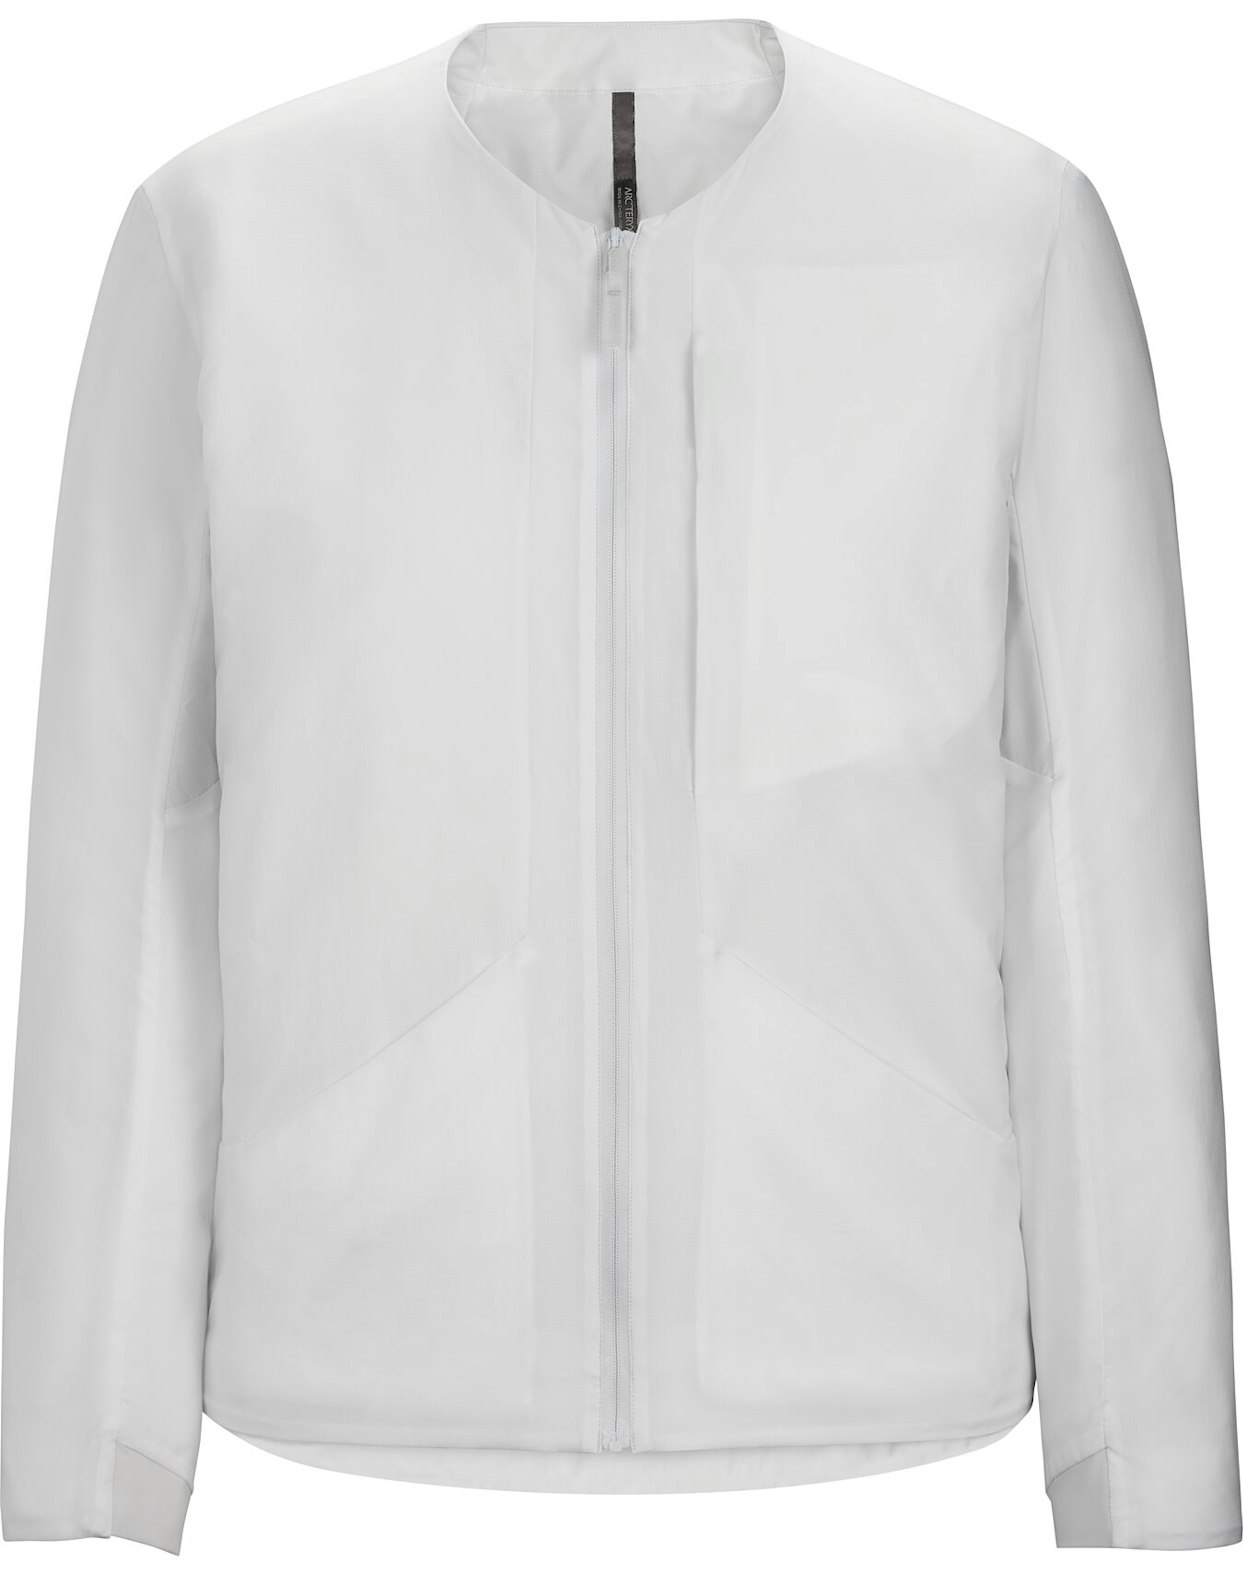 Cosine Insulated Jacket Women's | Arc'teryx